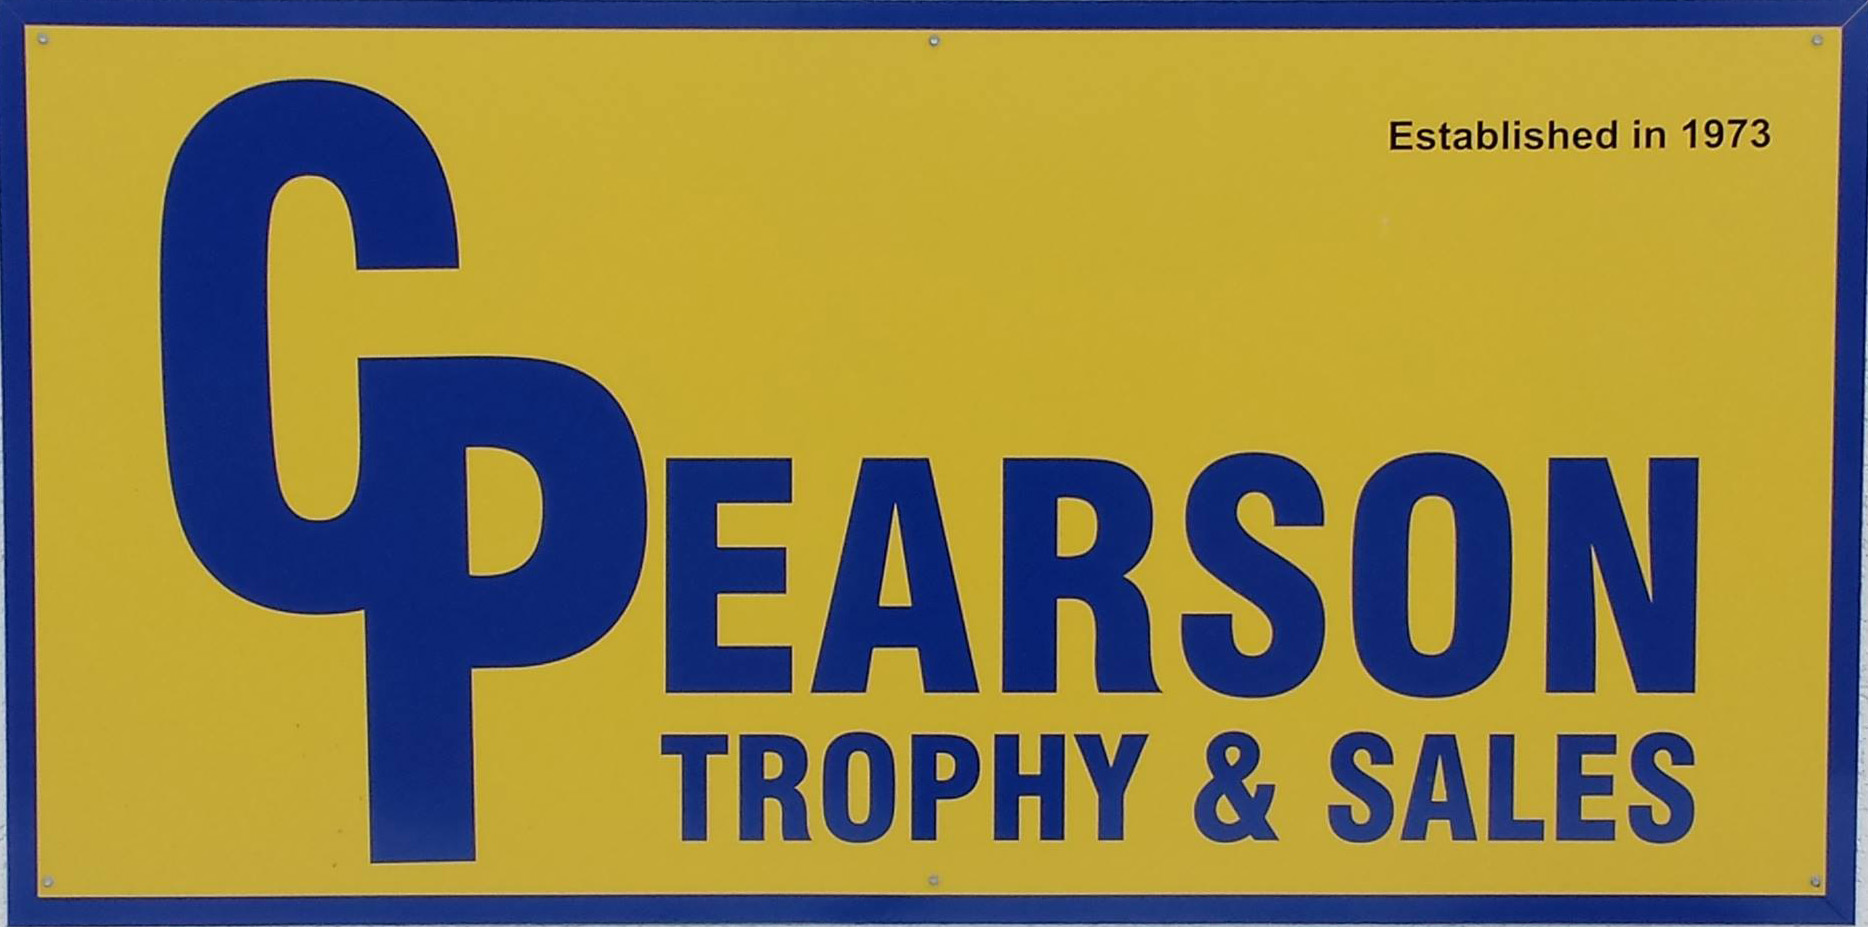 c pearson trophy